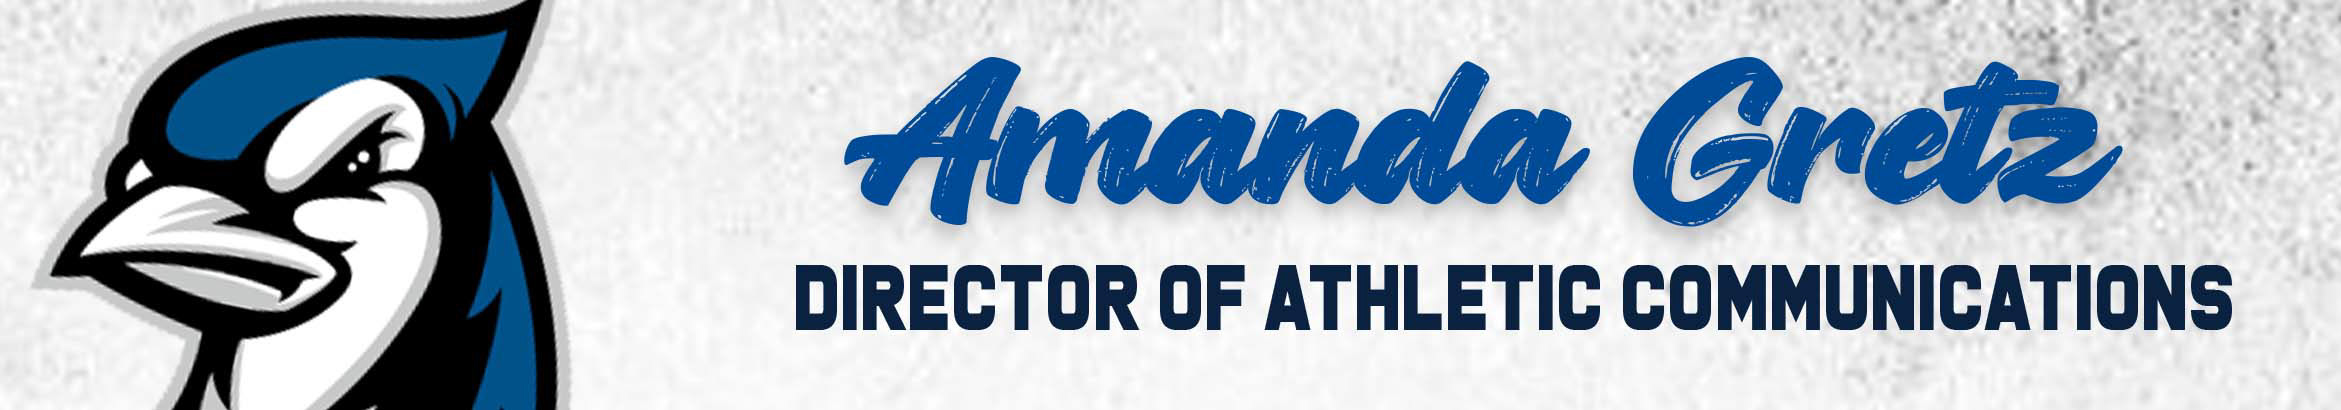 Amanda Gretz profil başlığı